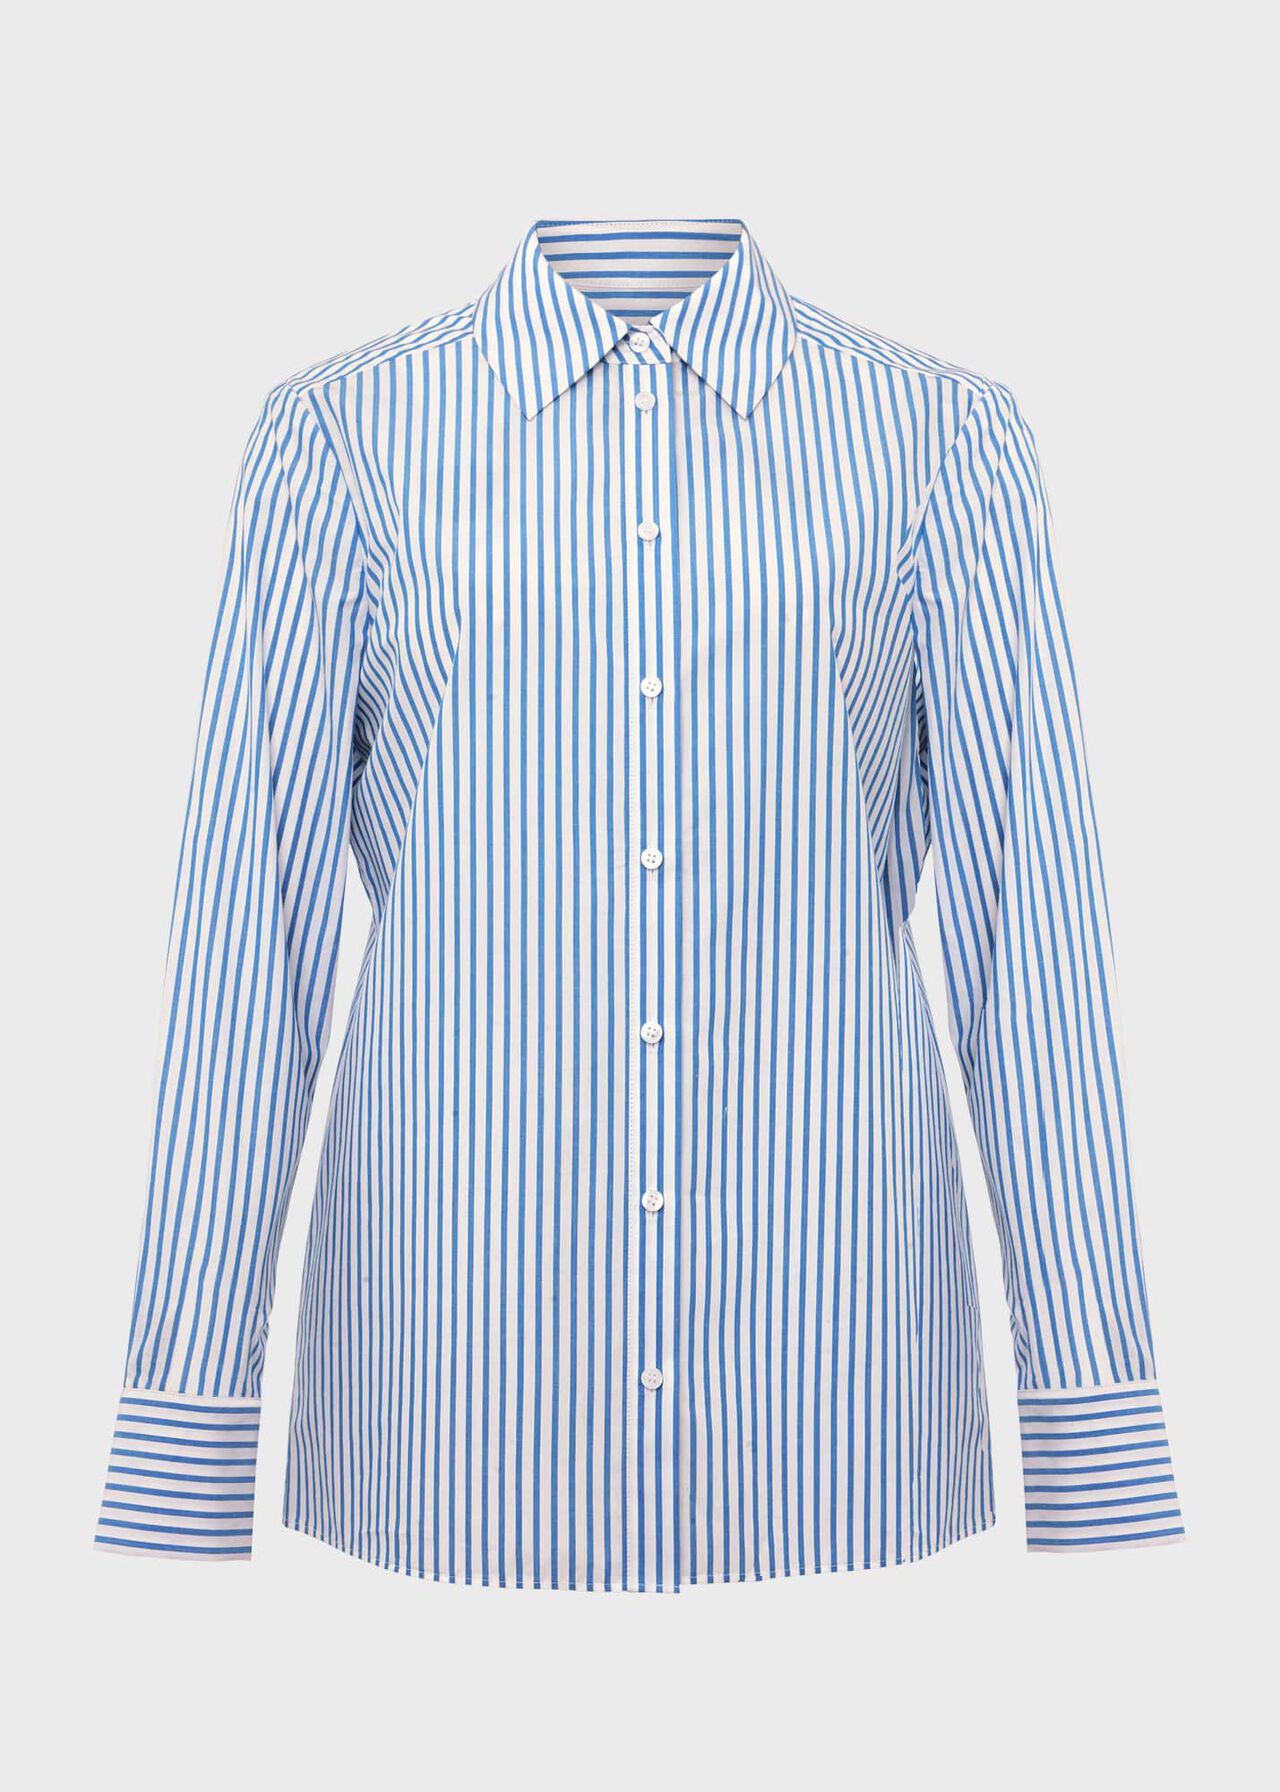 Wentworth Shirt, Blue White, hi-res